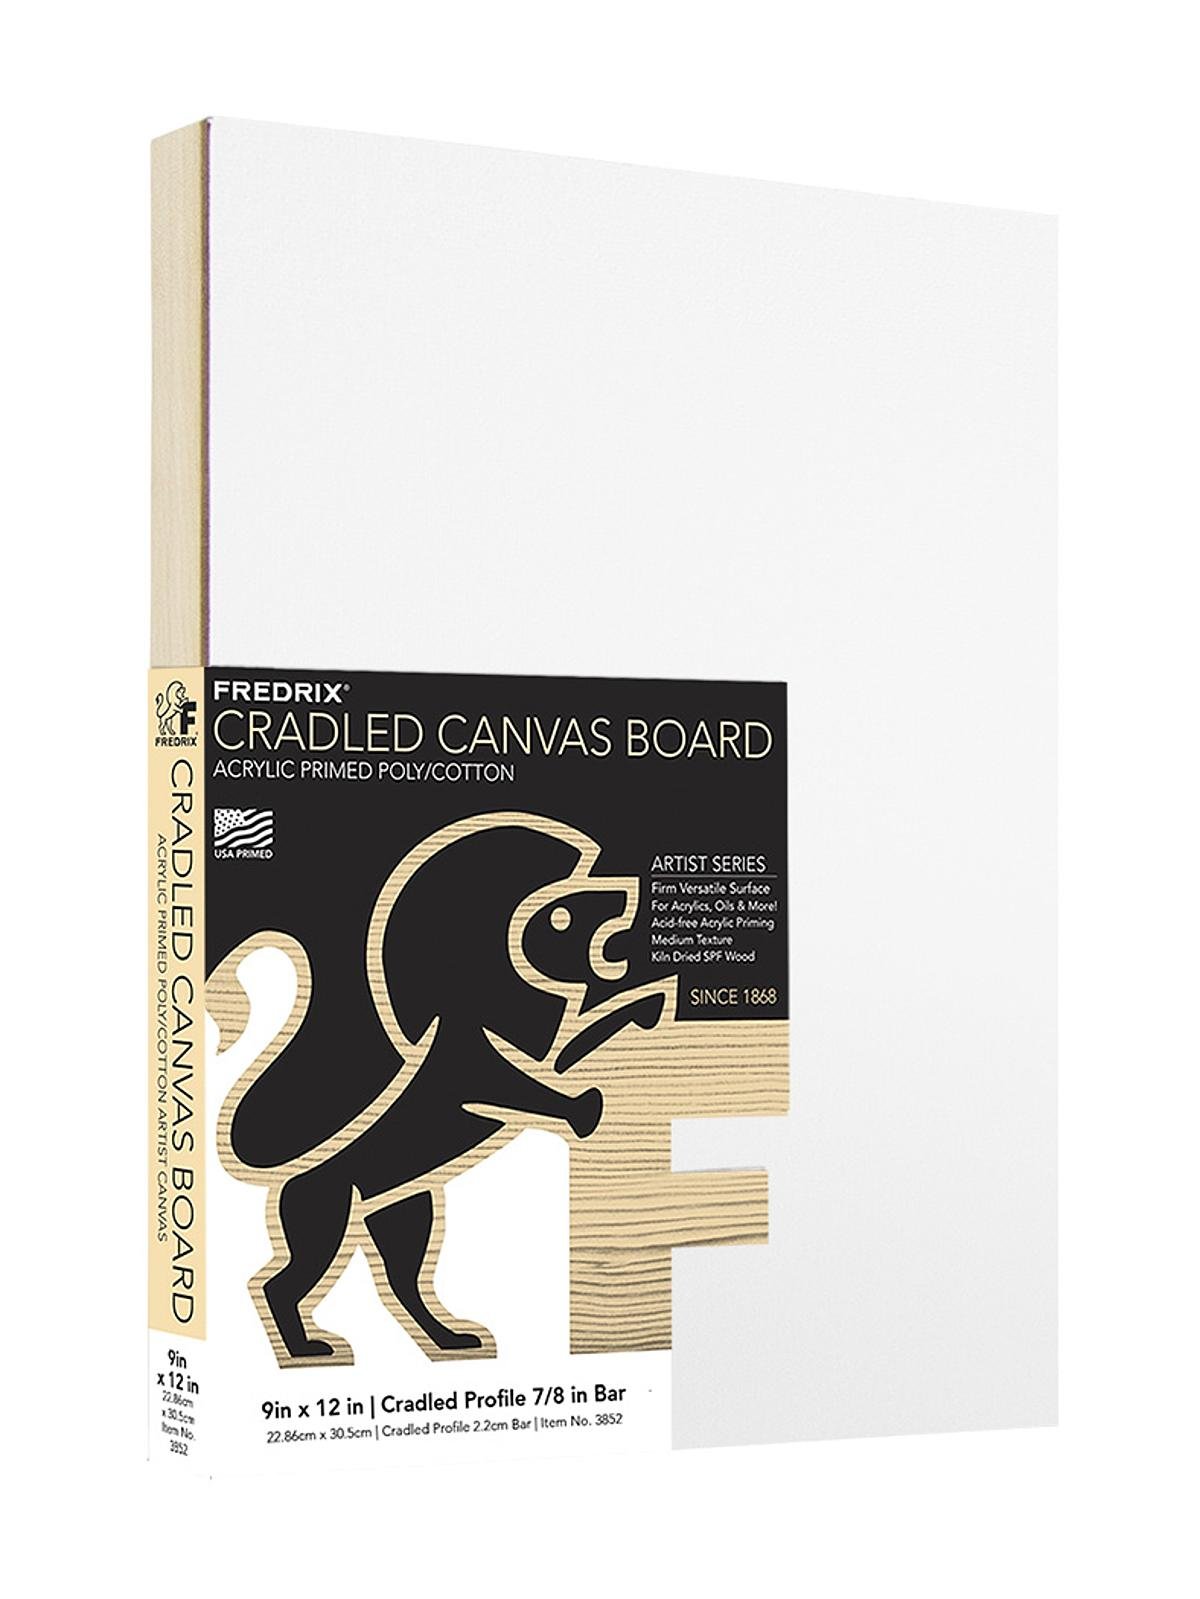 Fredrix Cradled Canvas Boards